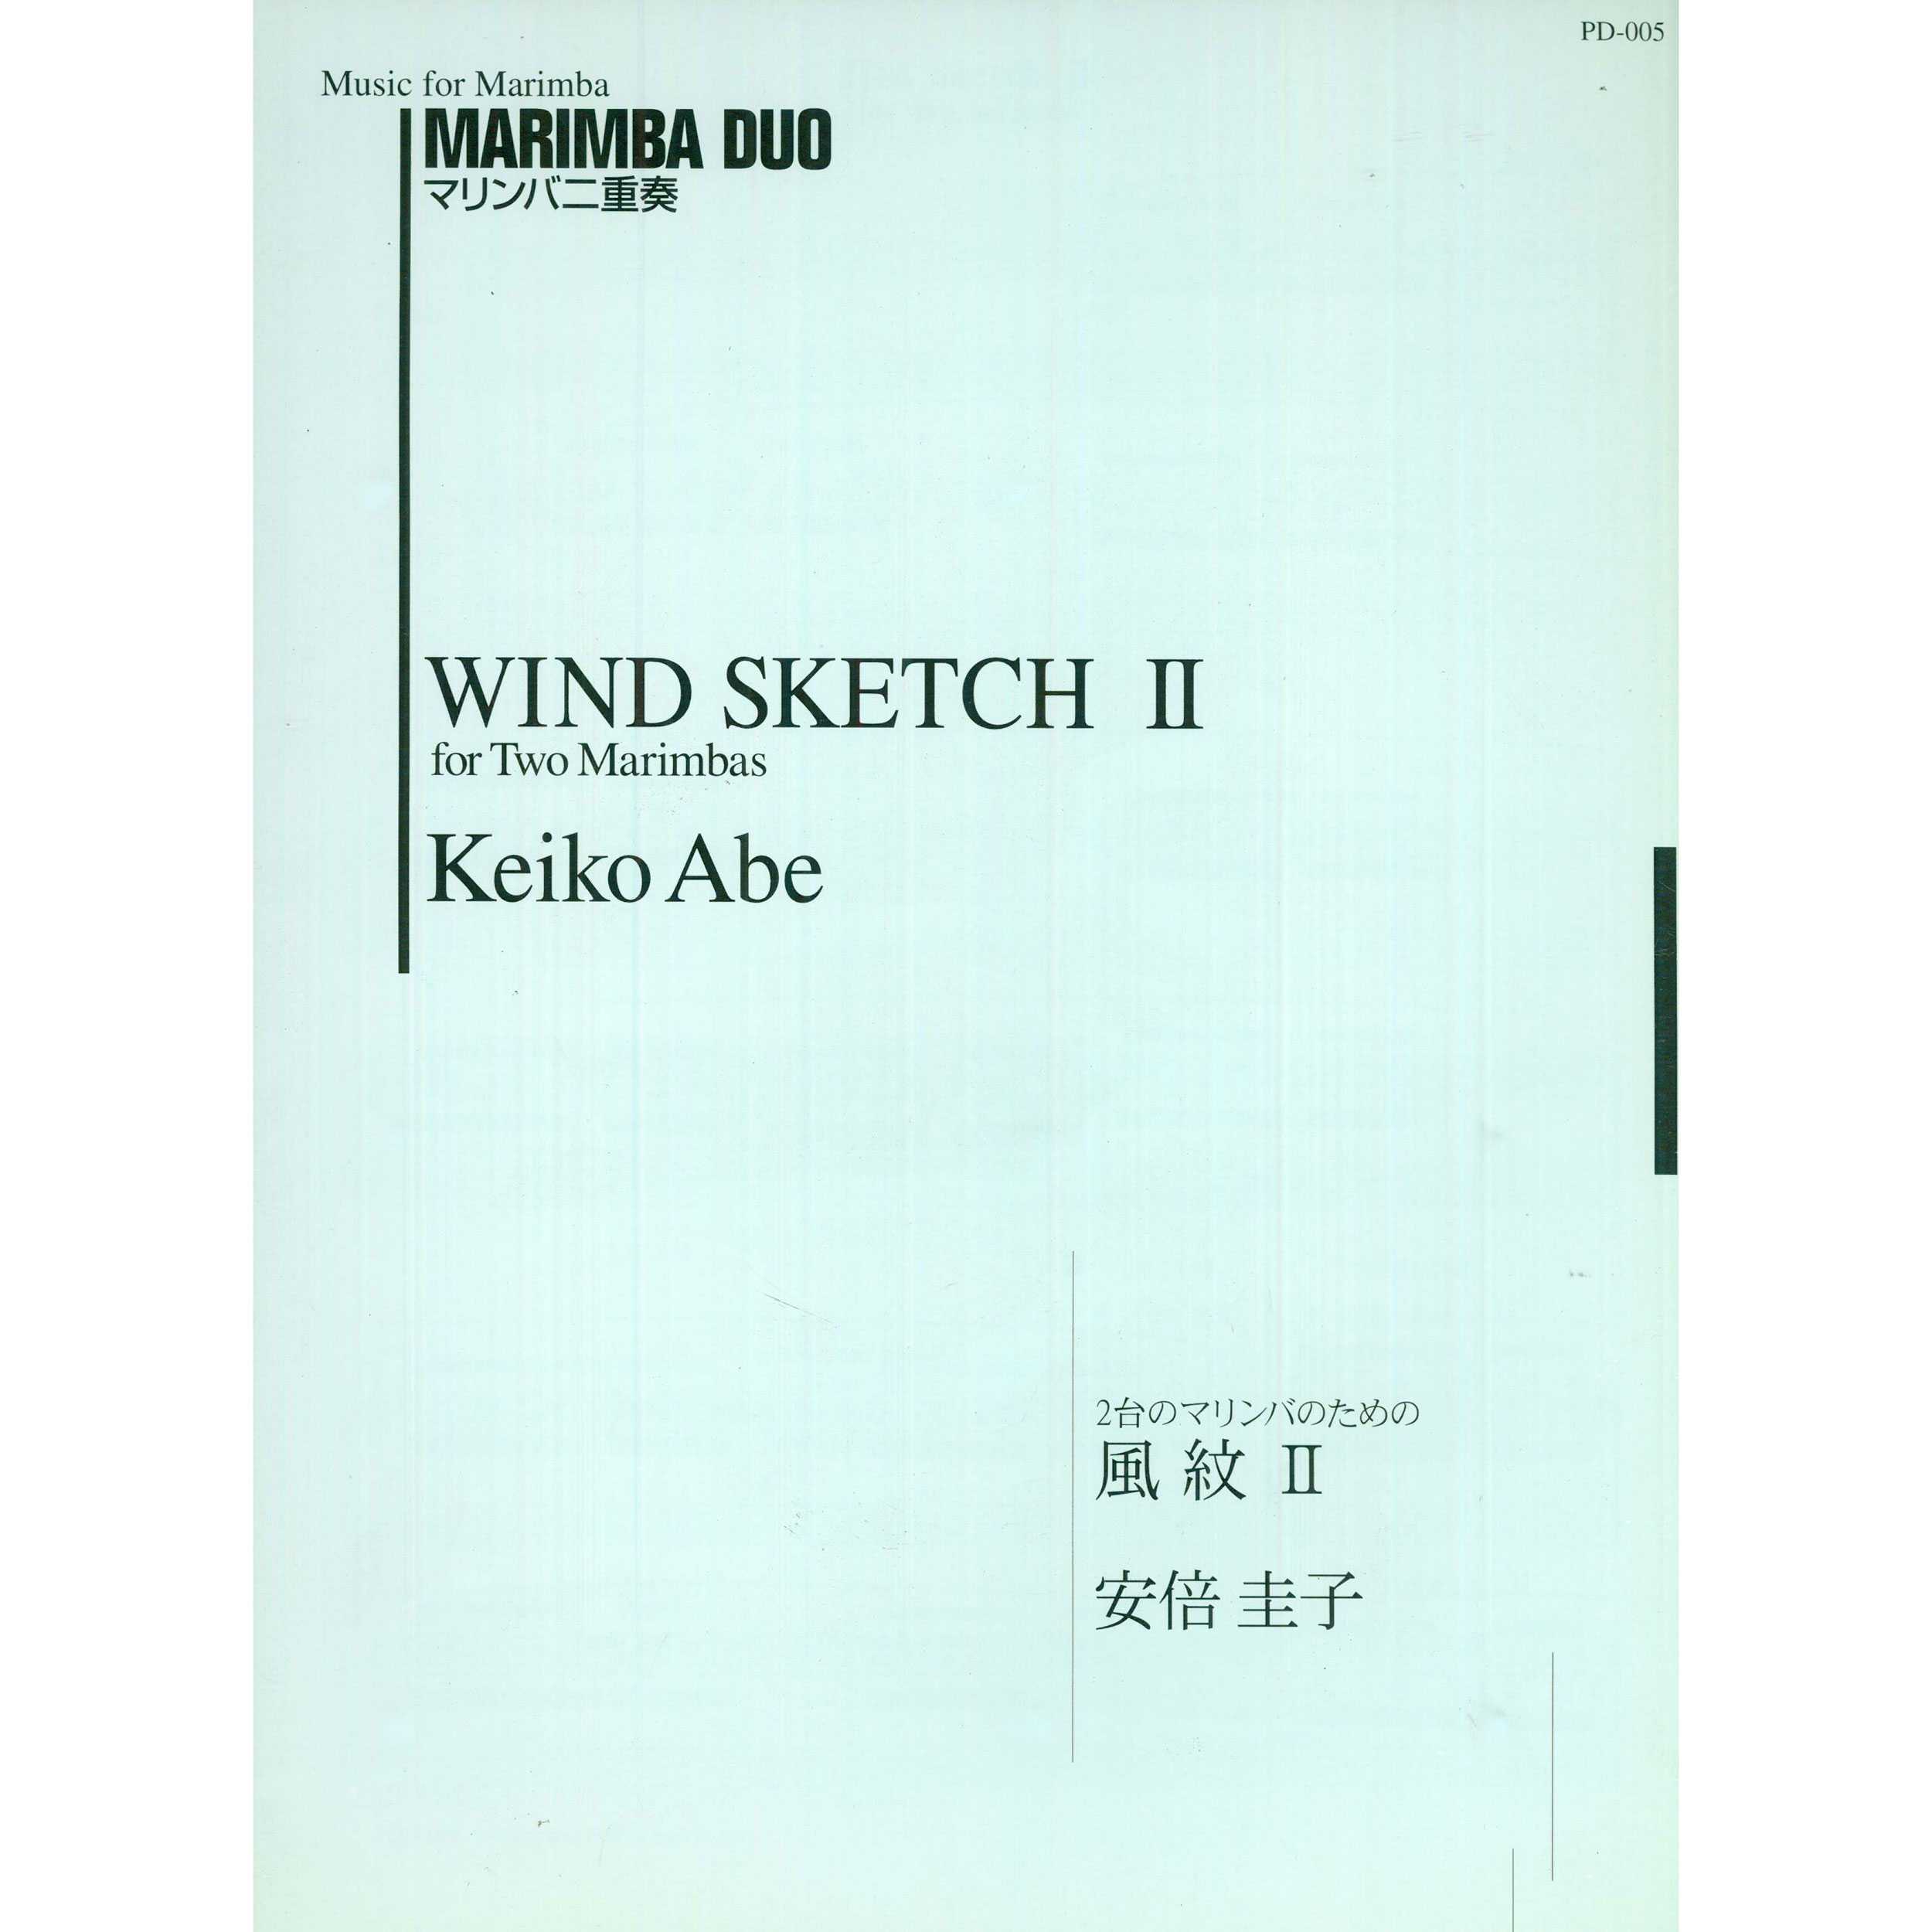 Wind Sketch II by Keiko Abe